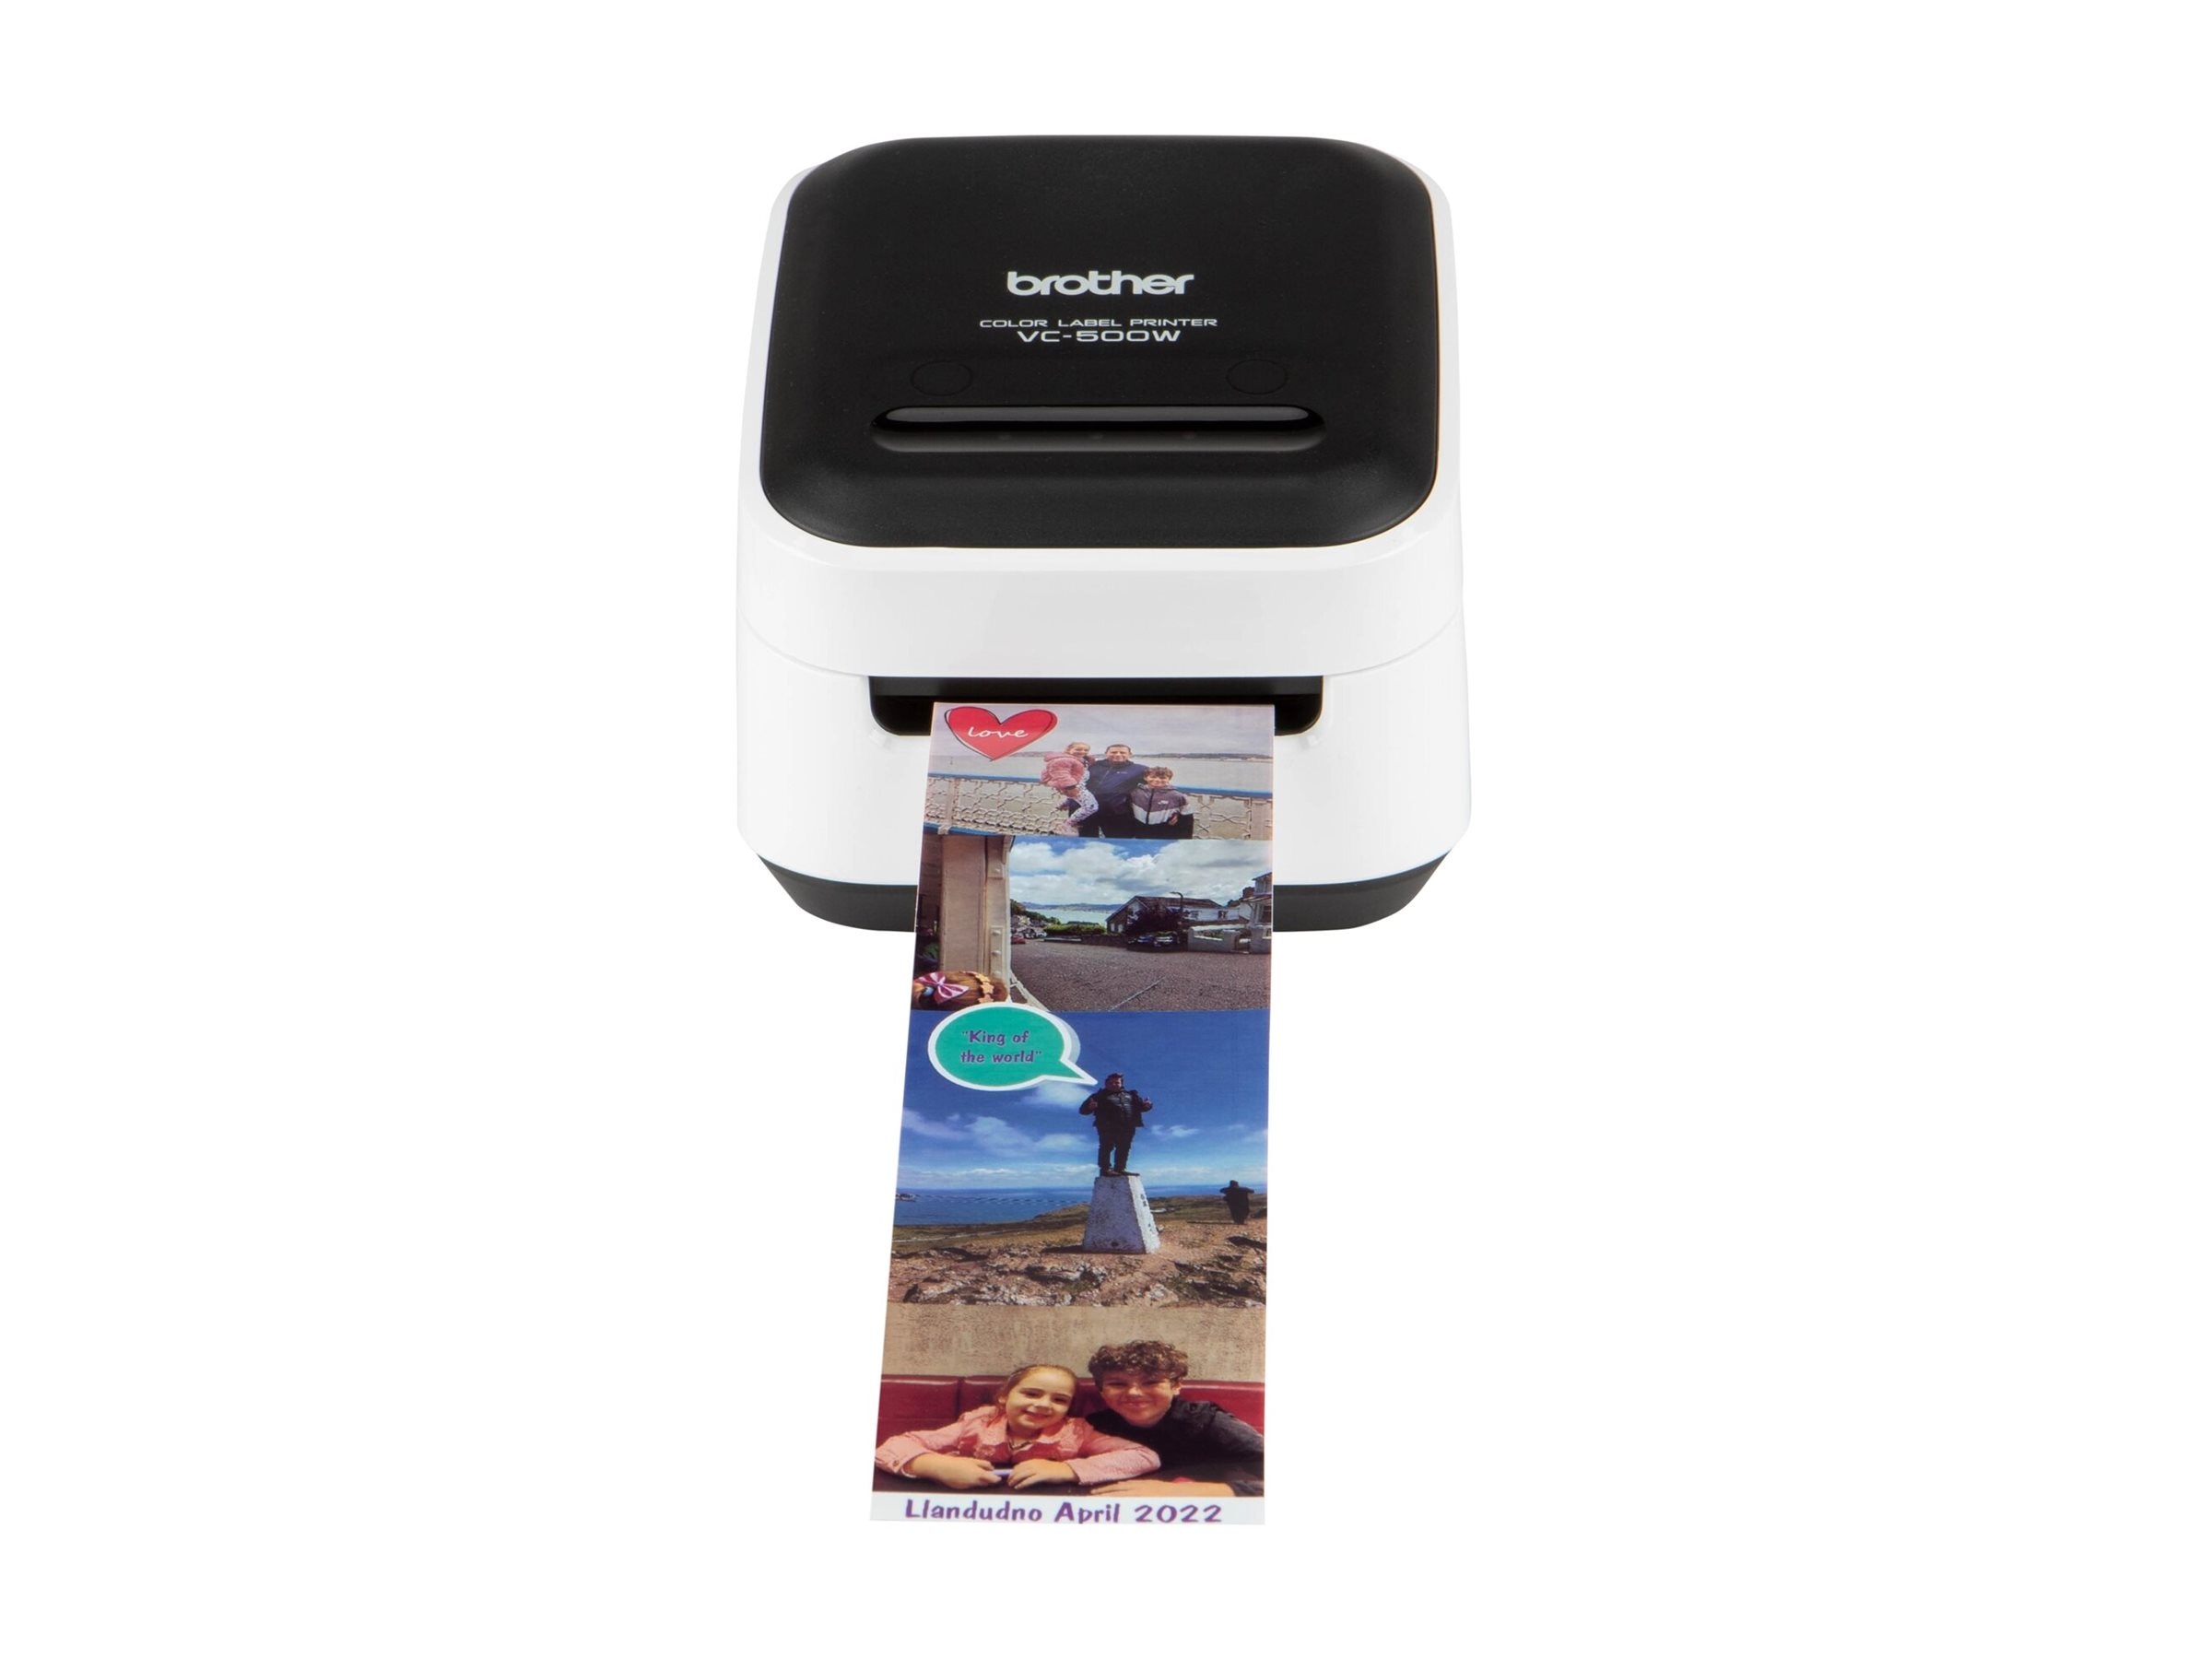 Brother VC-500W Versatile Compact Color Label & Photo Printer (VC-500W)